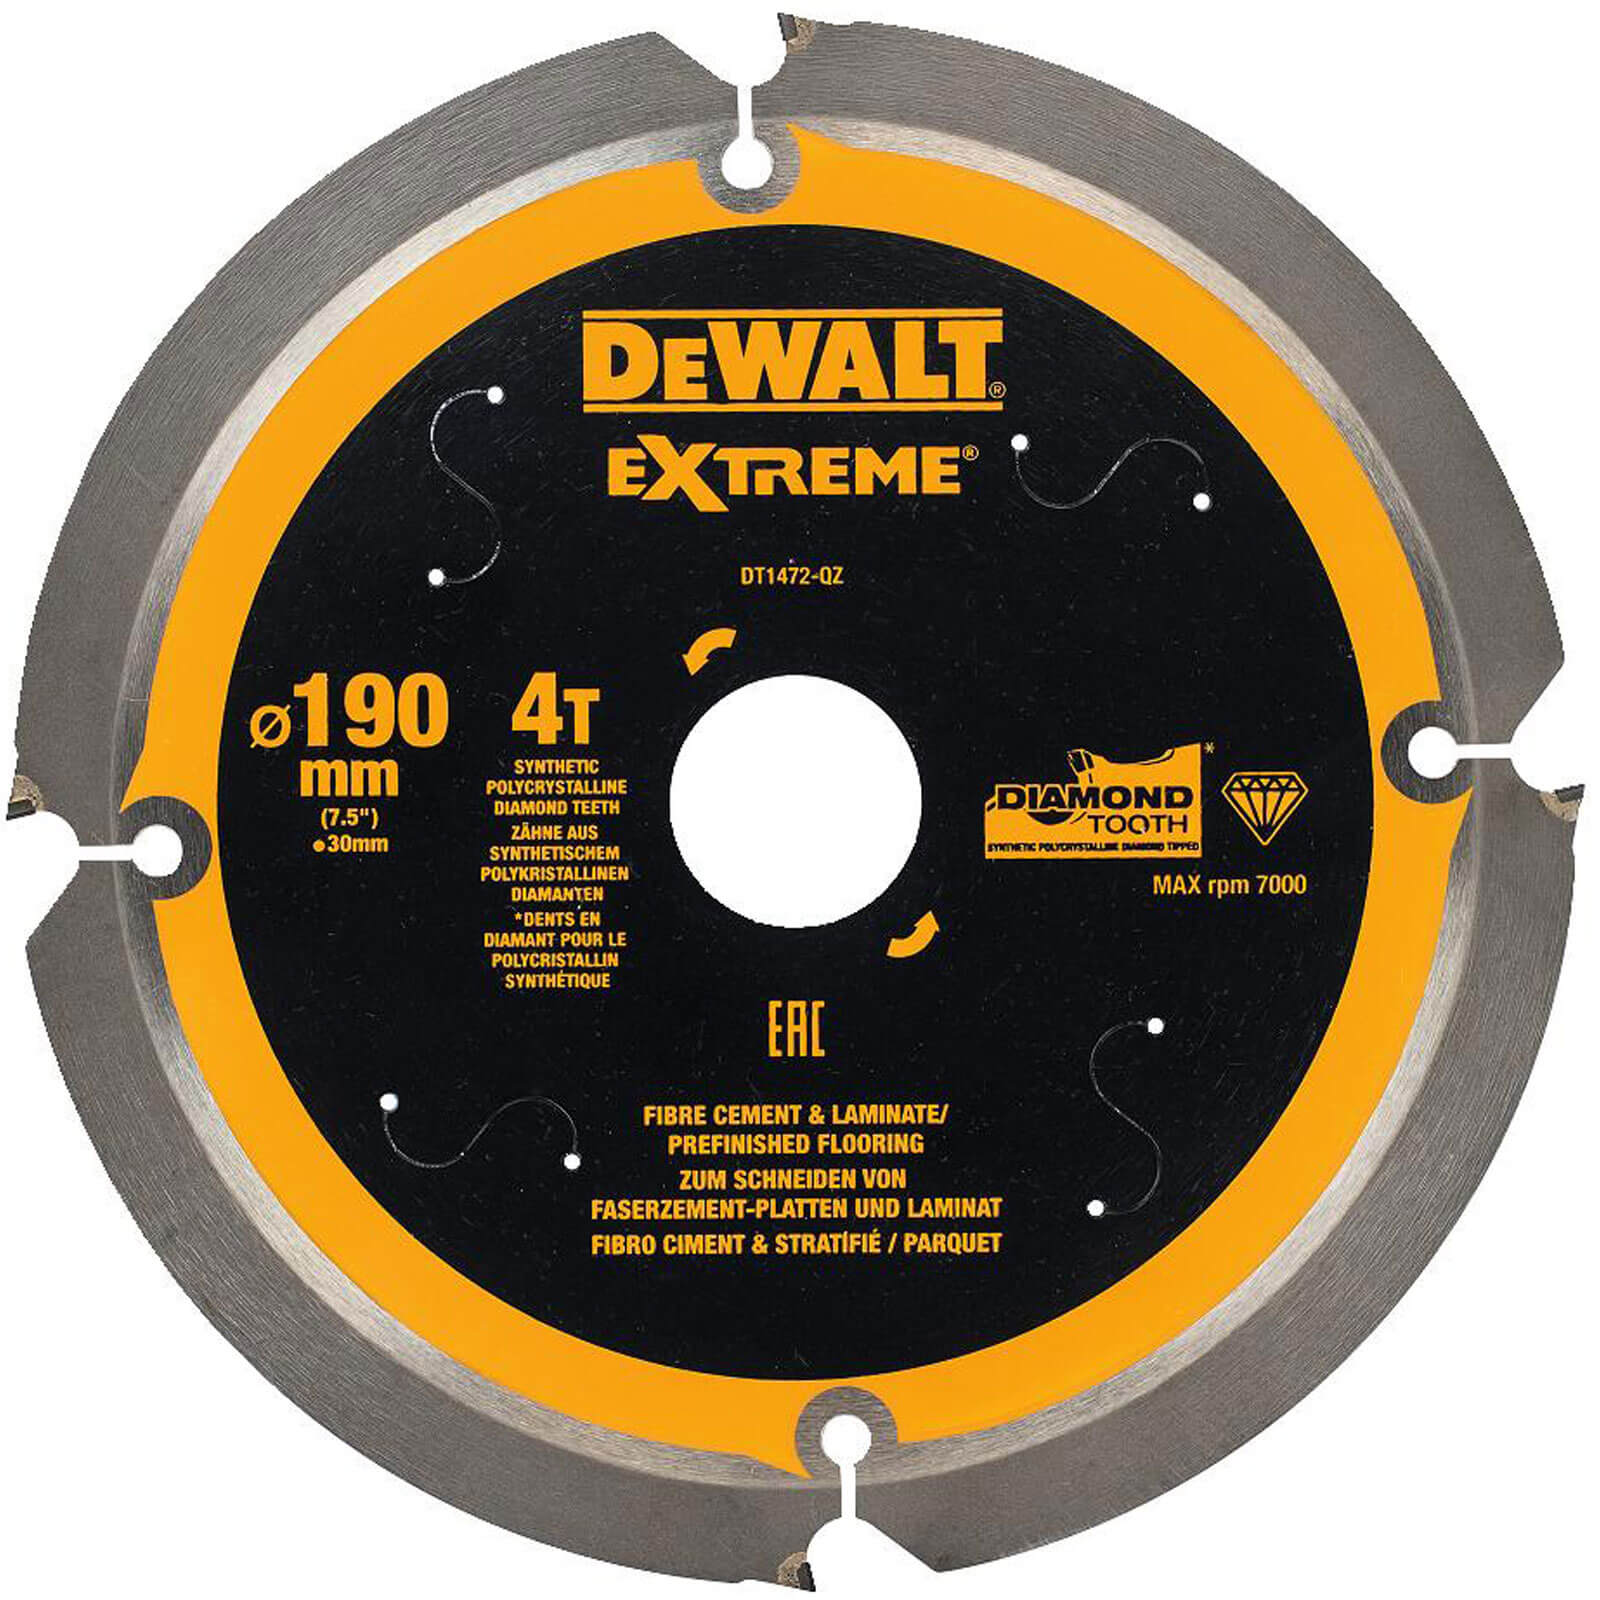 Image of DeWalt PCD Fibre Cement Saw Blade 190mm 4T 30mm